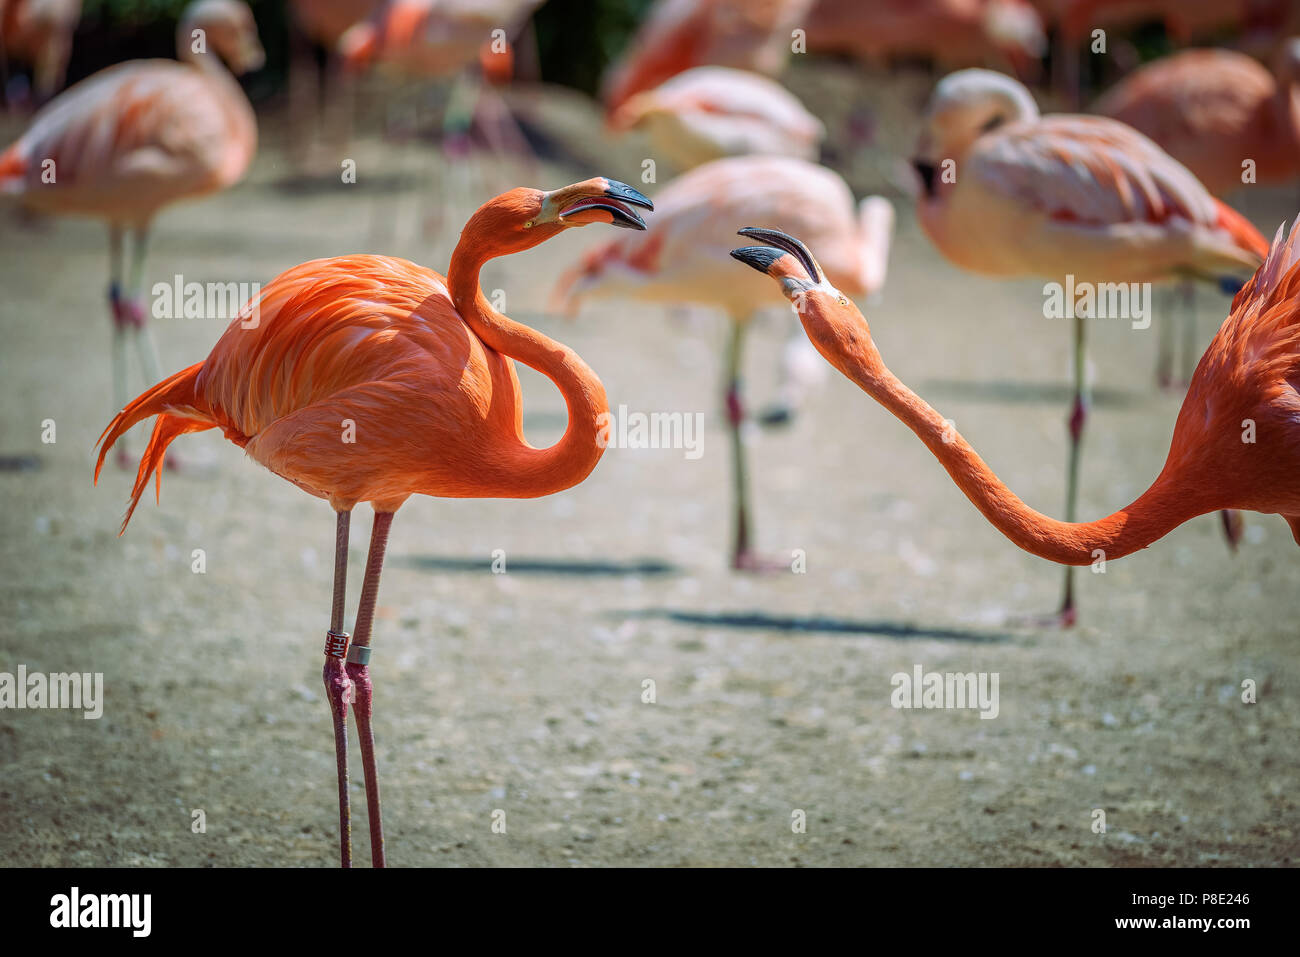 Zwei karibische Flamingos im Kampf Stockfoto